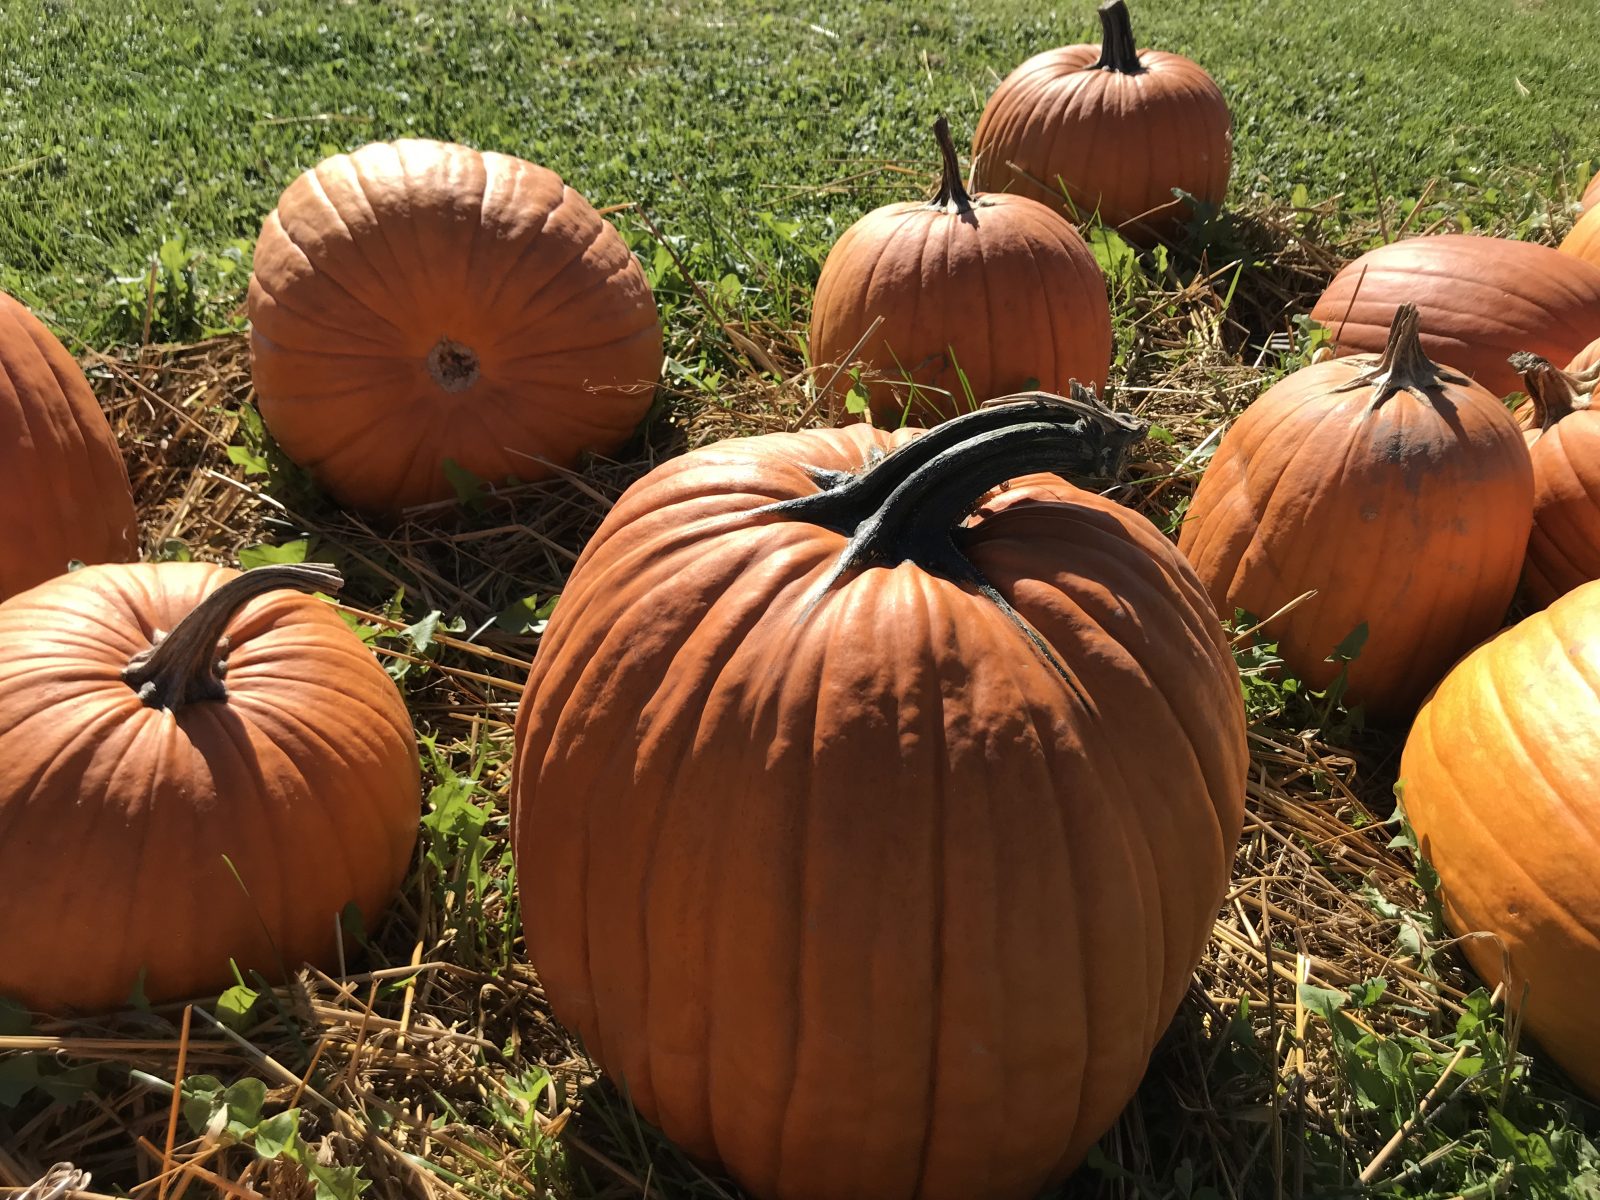 Giant Pumpkin and Harvest Festival happening Oct.14